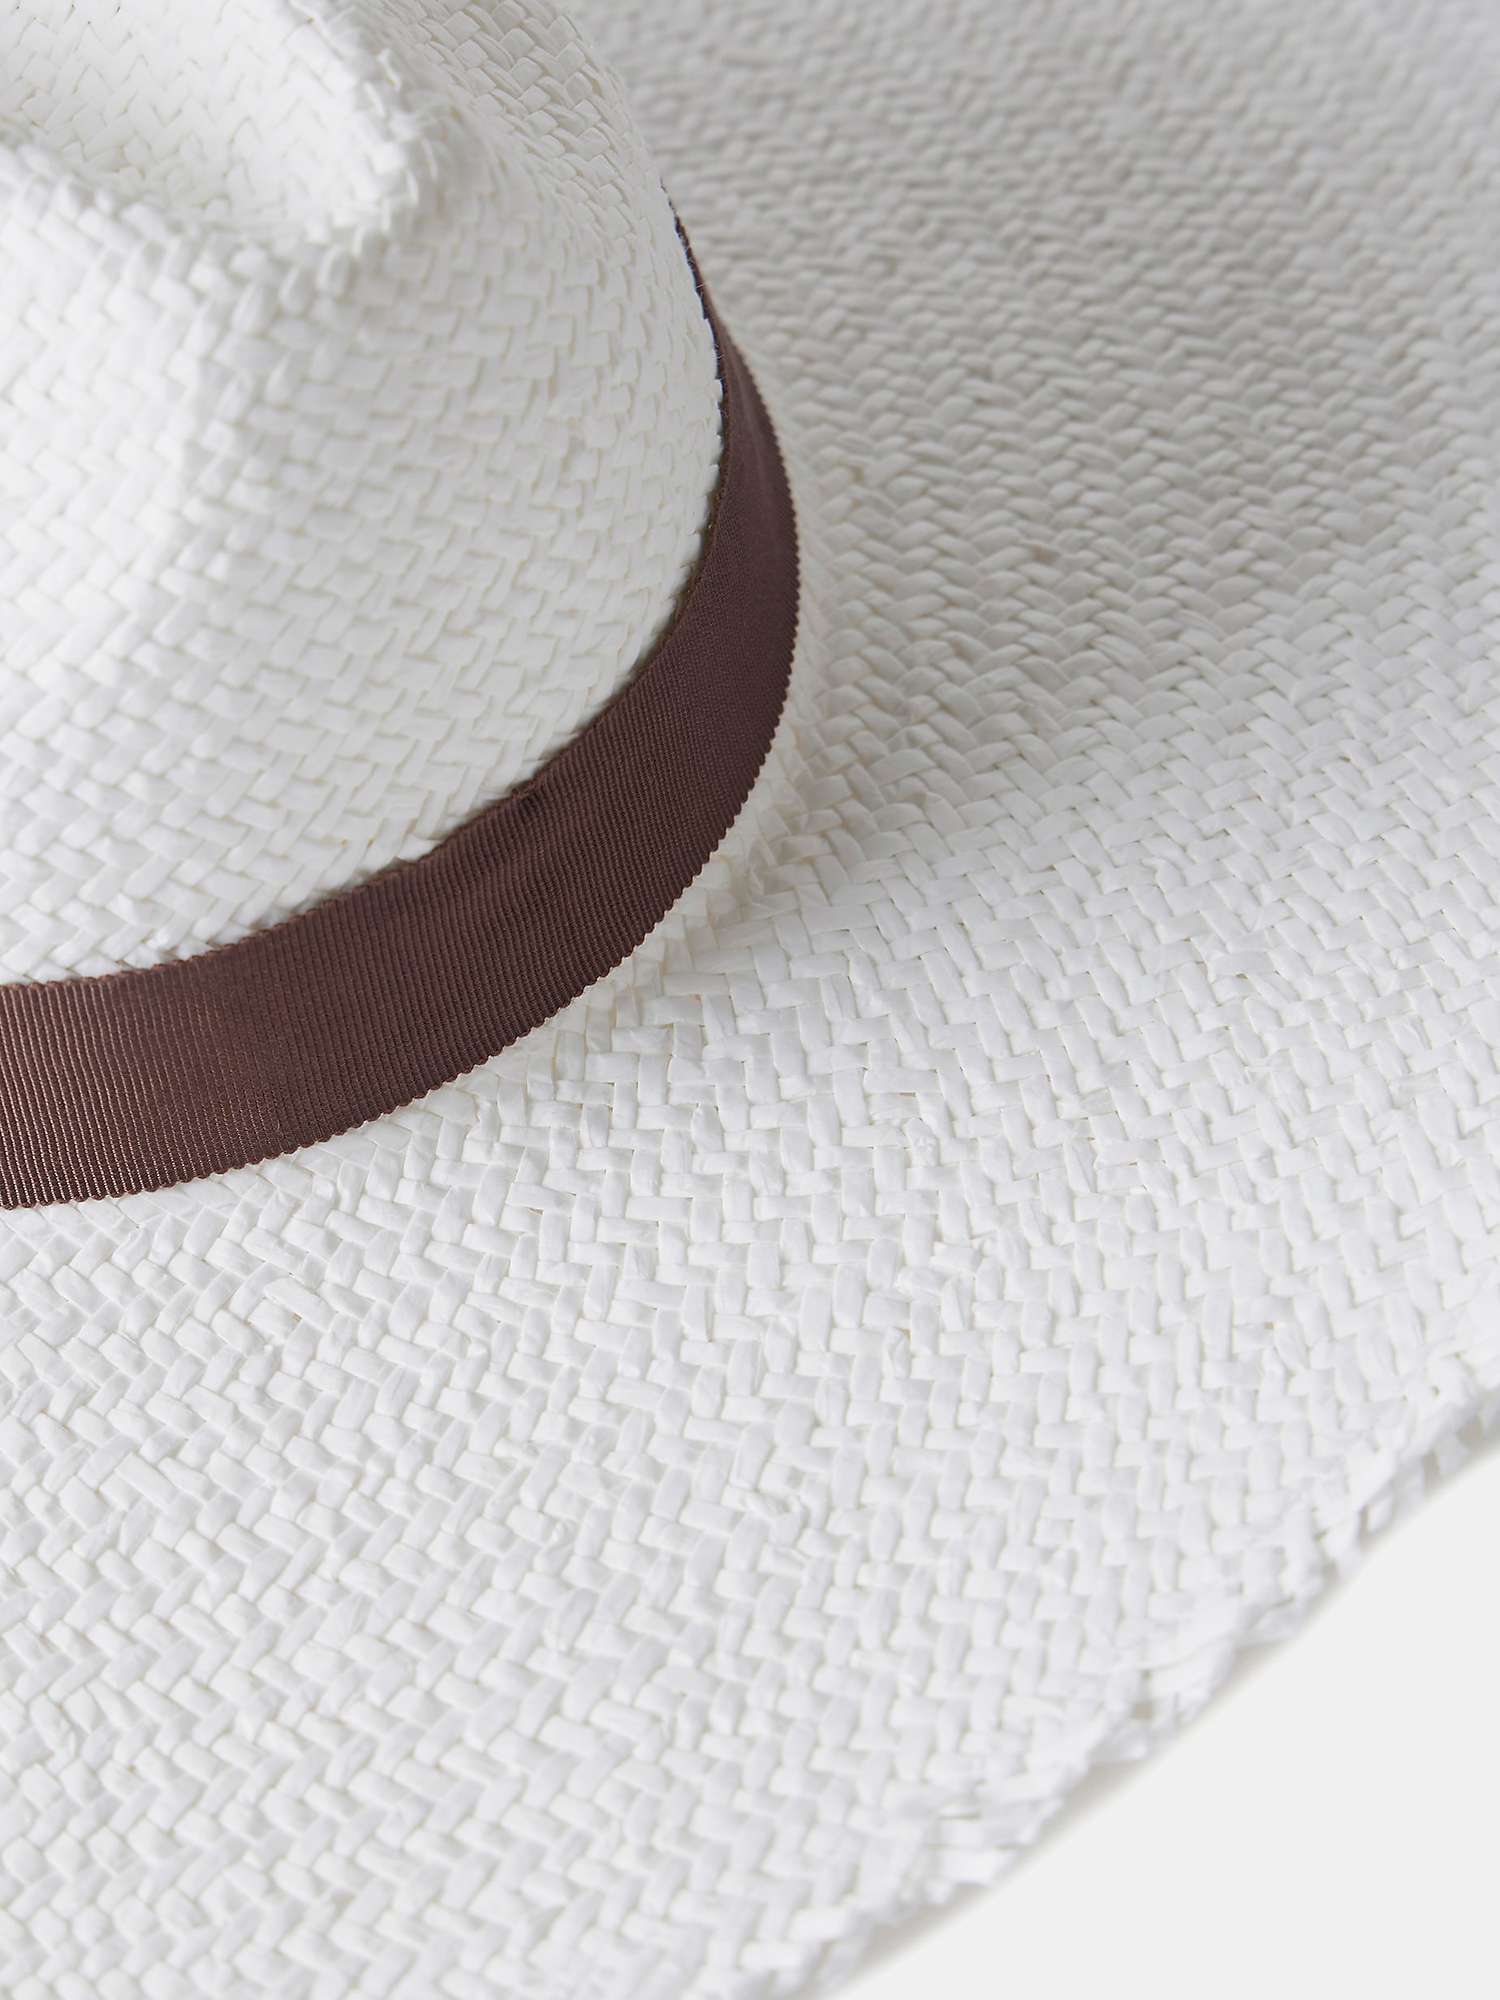 Buy Mint Velvet Frayed Straw Hat, Natural Cream Online at johnlewis.com